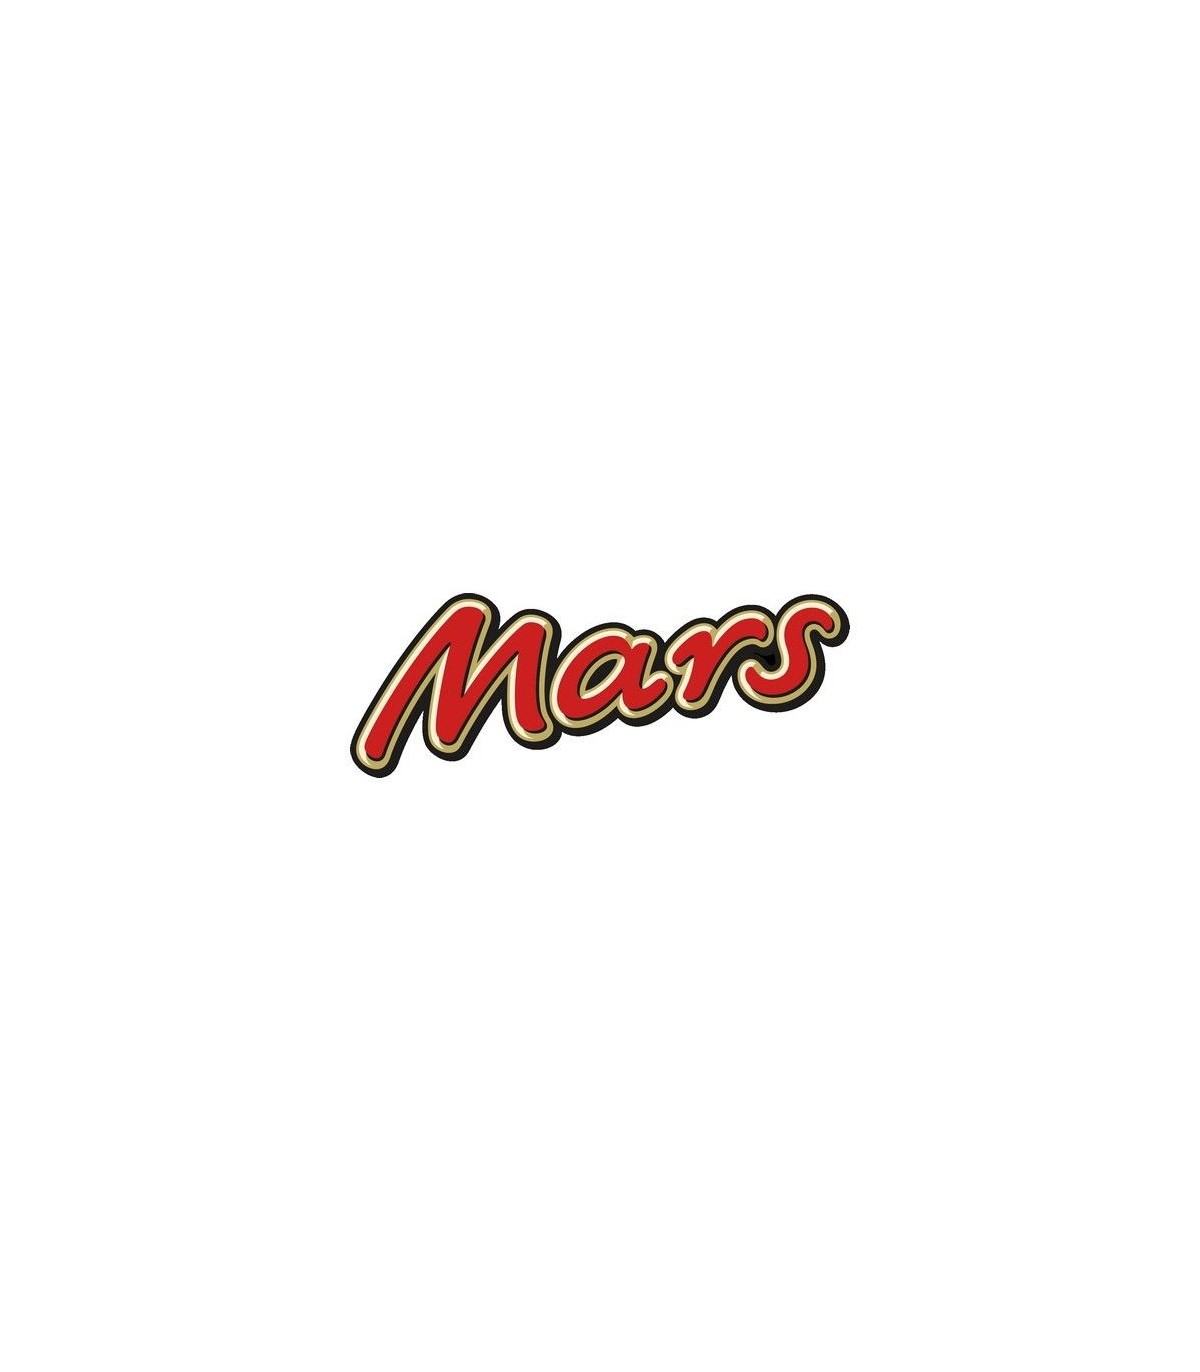 Dolce Gusto Chocolate Capsules (Mars, 40 Capsules)